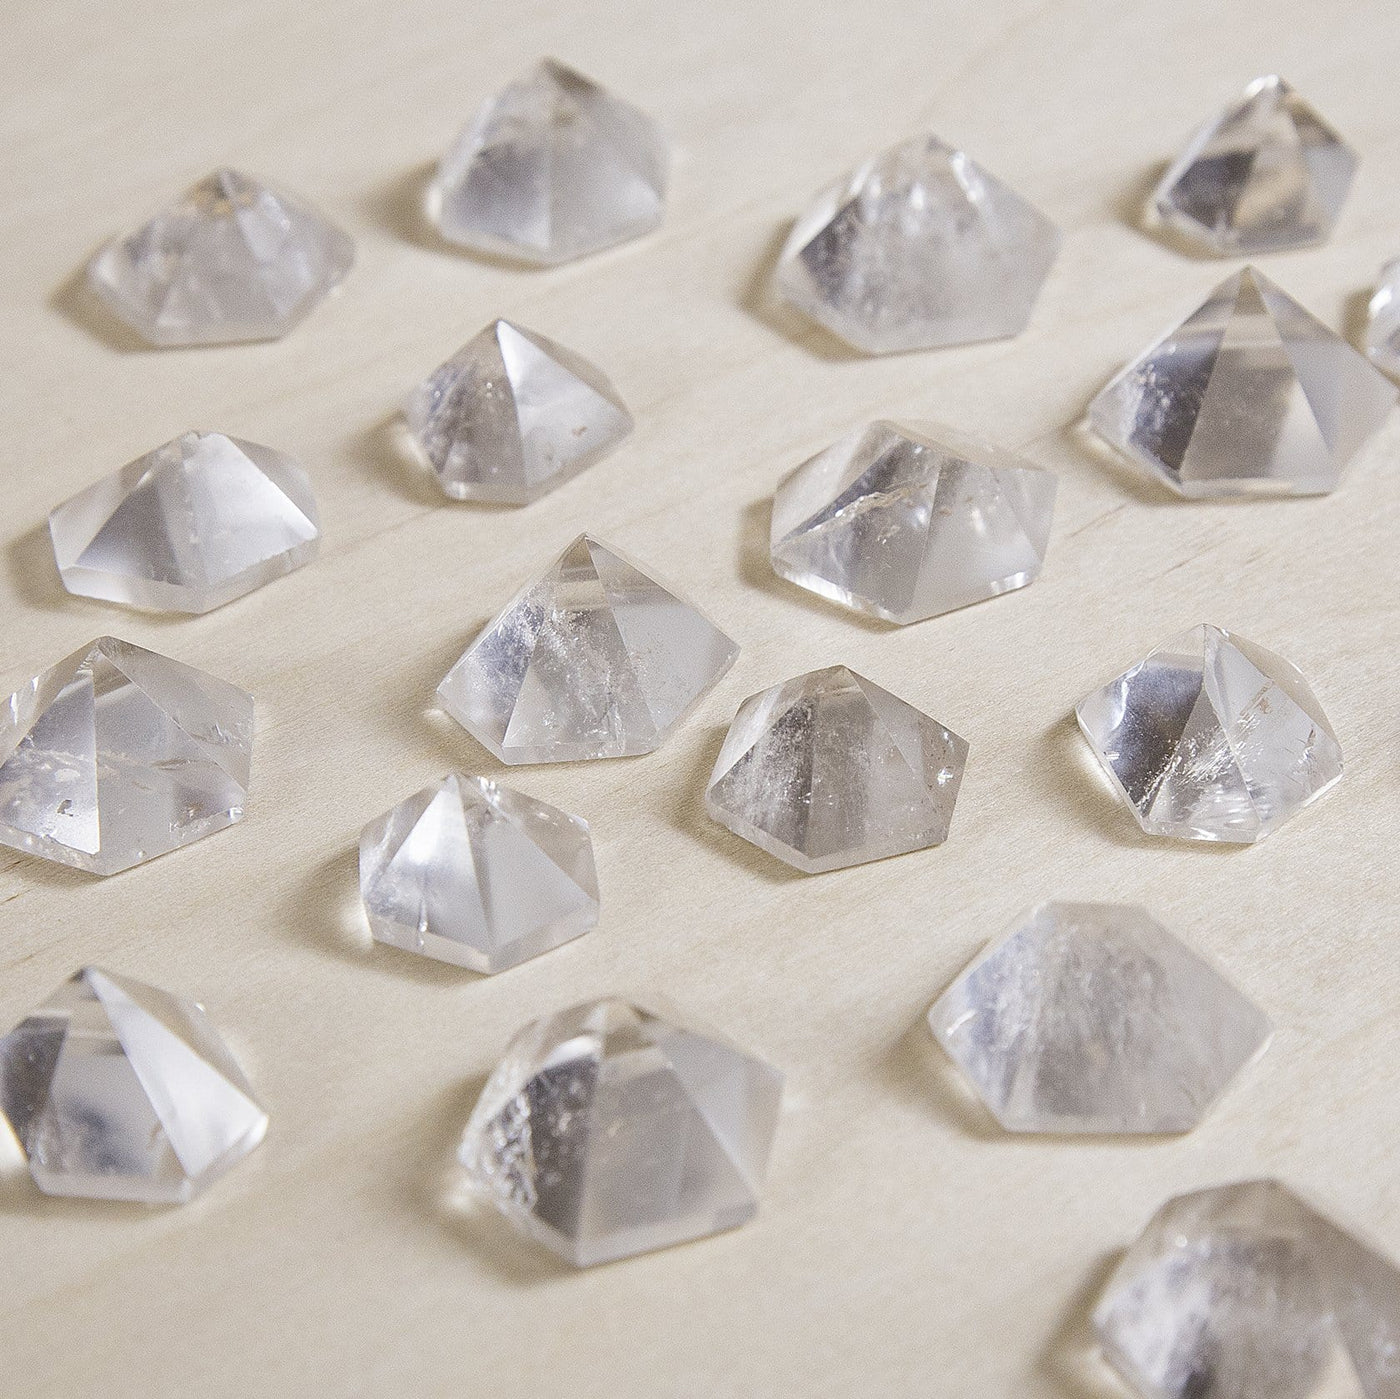 Hexagonal Crystal quartz Pyramid side view to show size variations